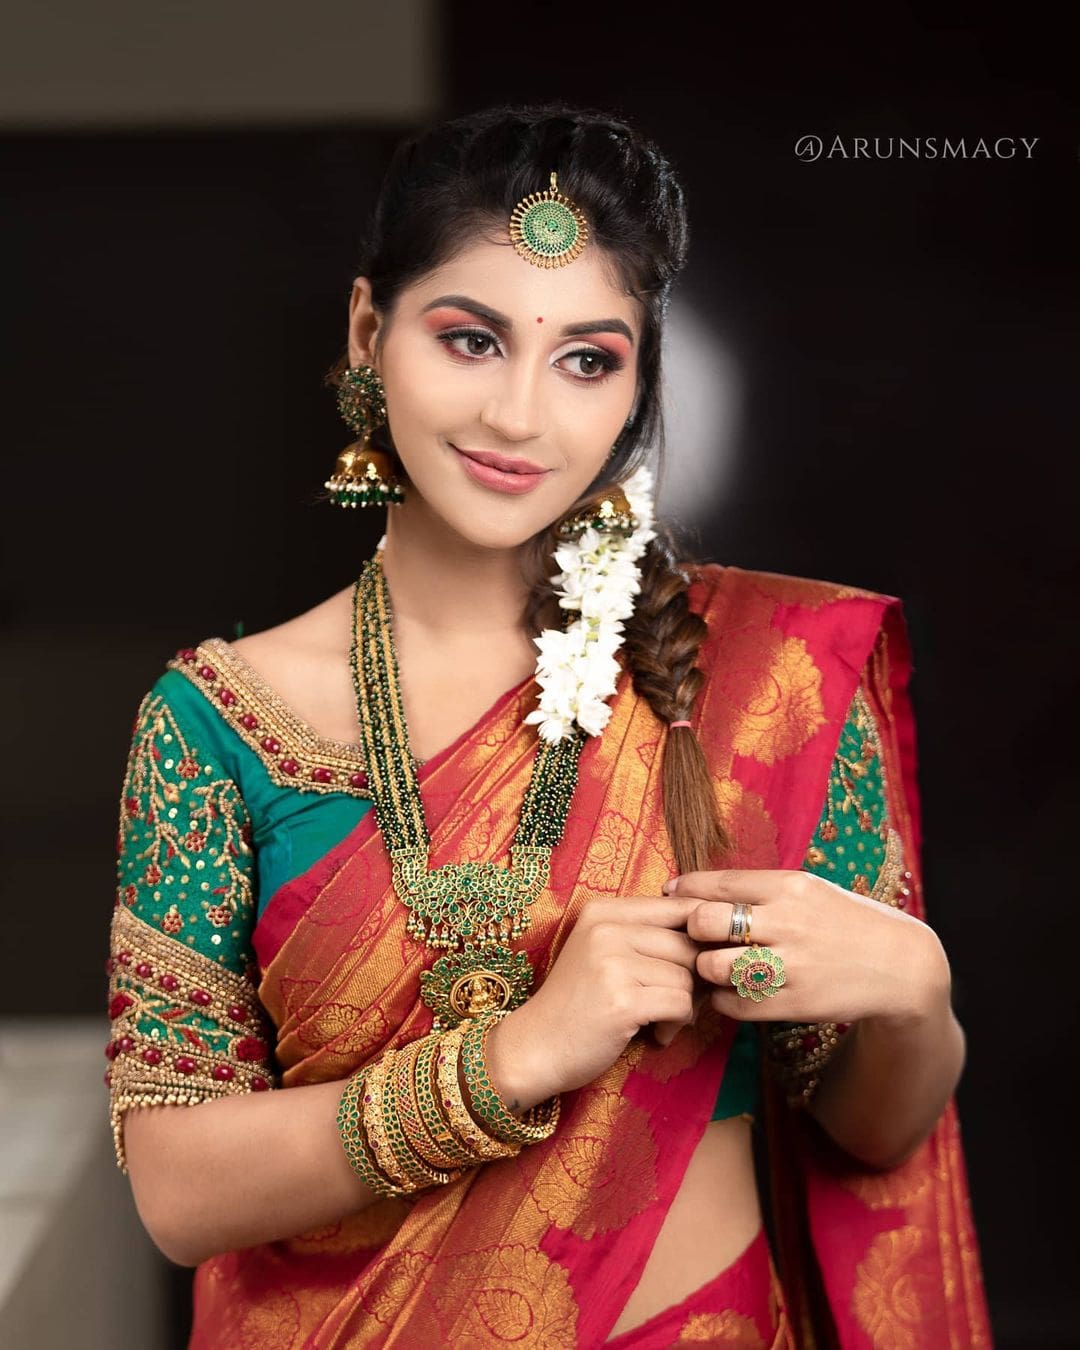 Murattu Single looks Stunning in Saree. Yashika Aannand.